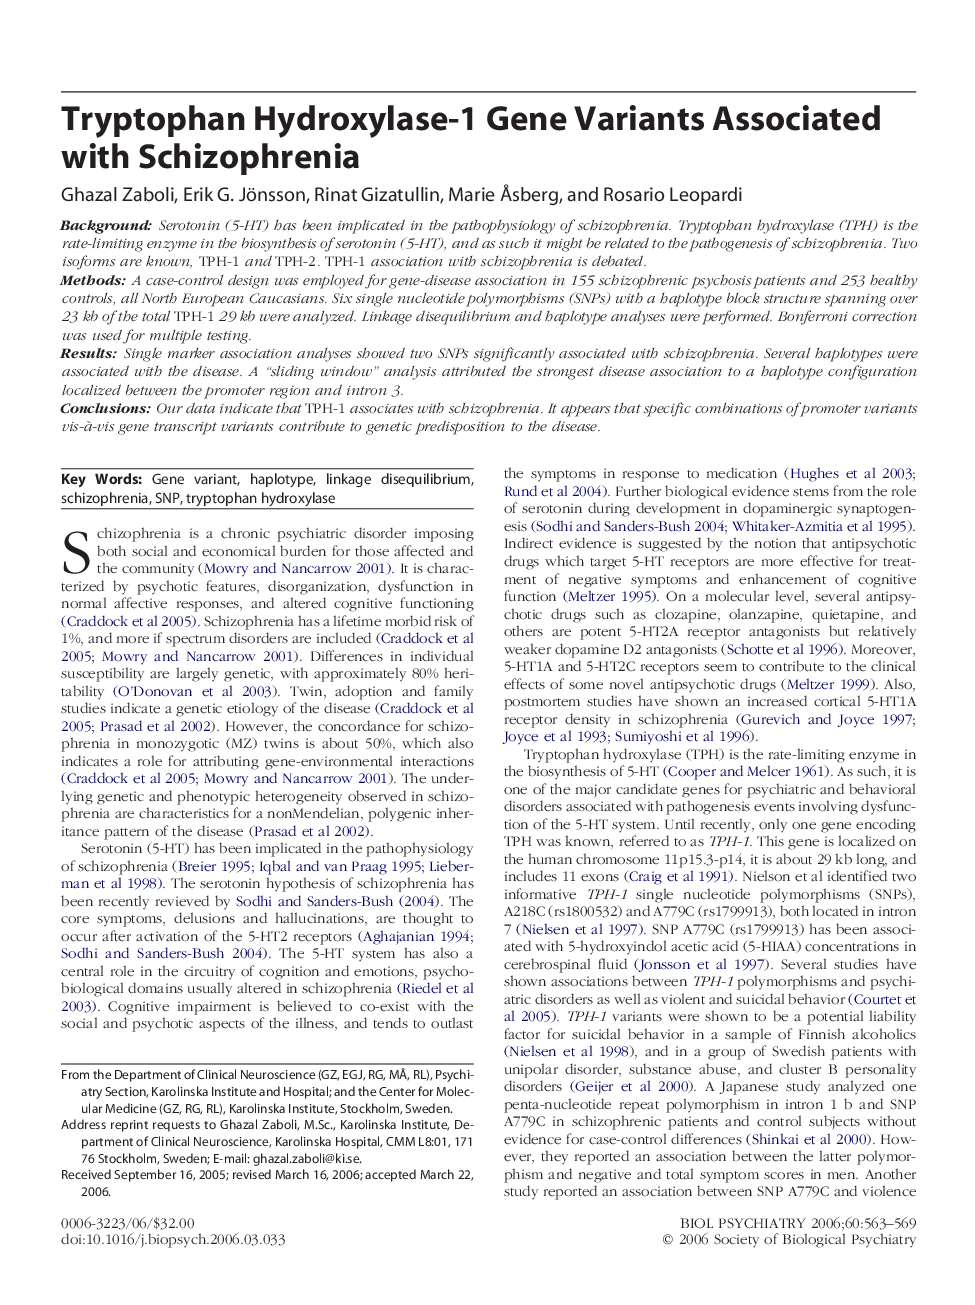 Tryptophan Hydroxylase-1 Gene Variants Associated with Schizophrenia